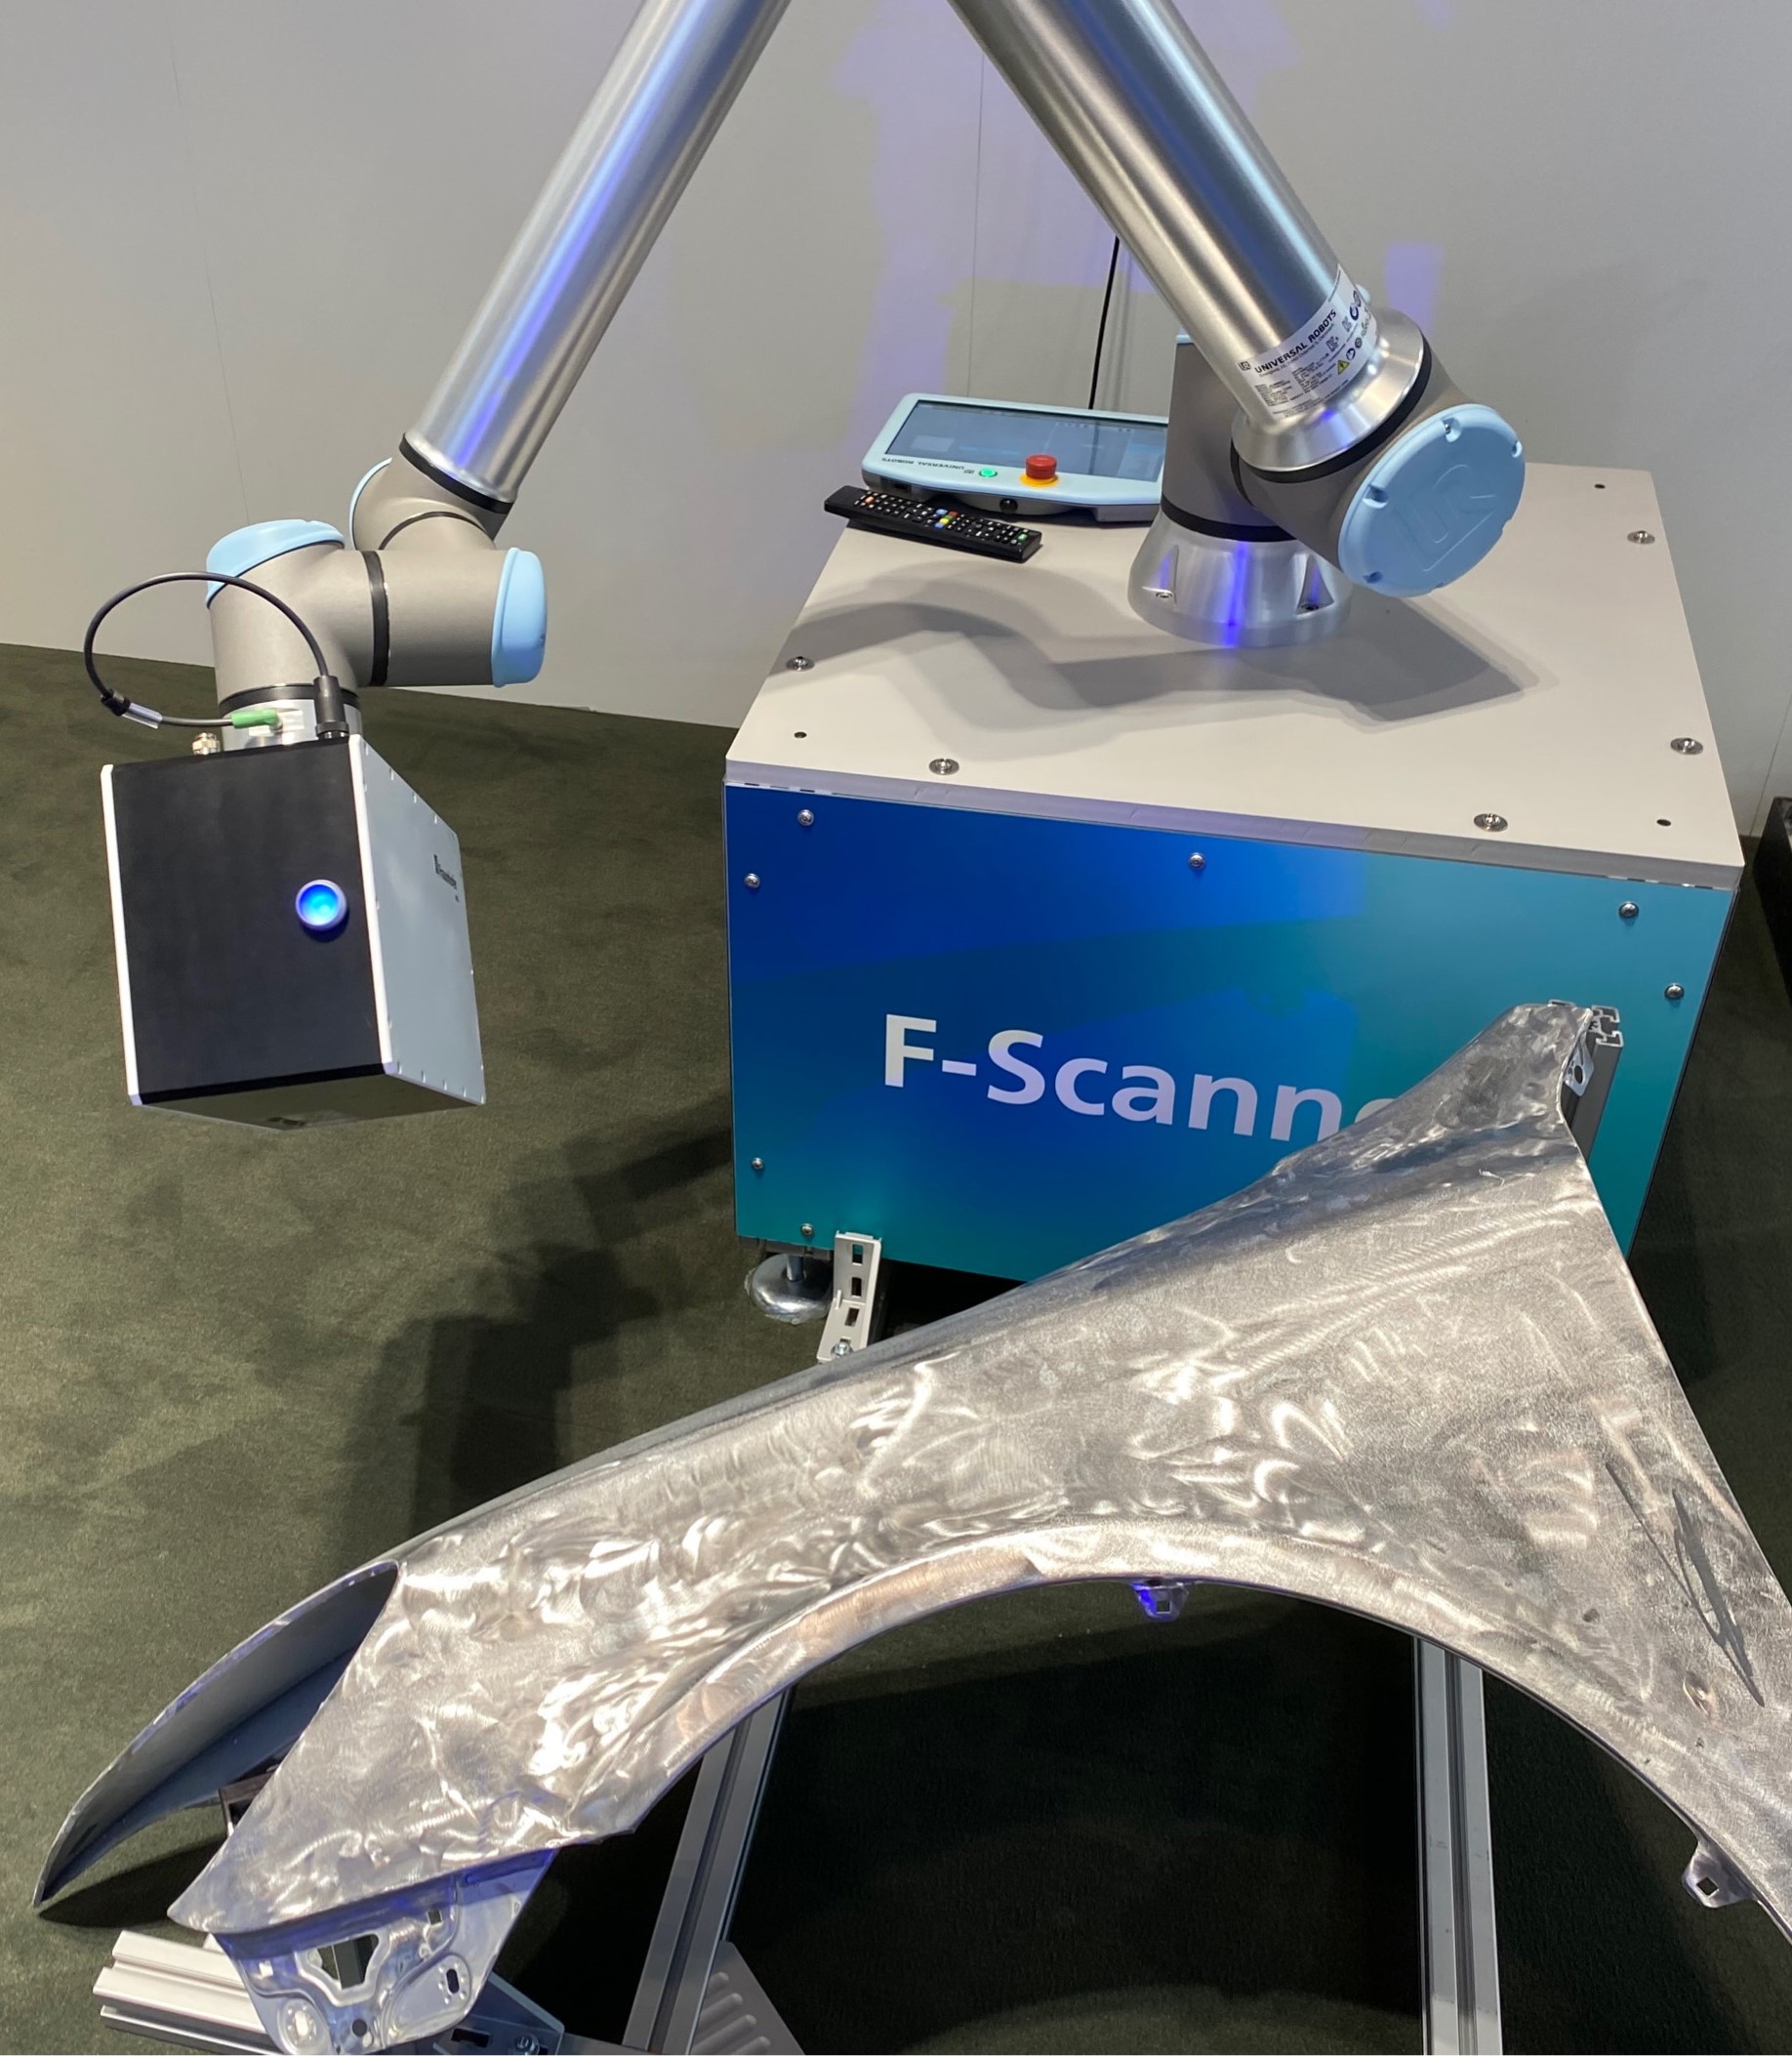  F-Scanner am Roboterarm